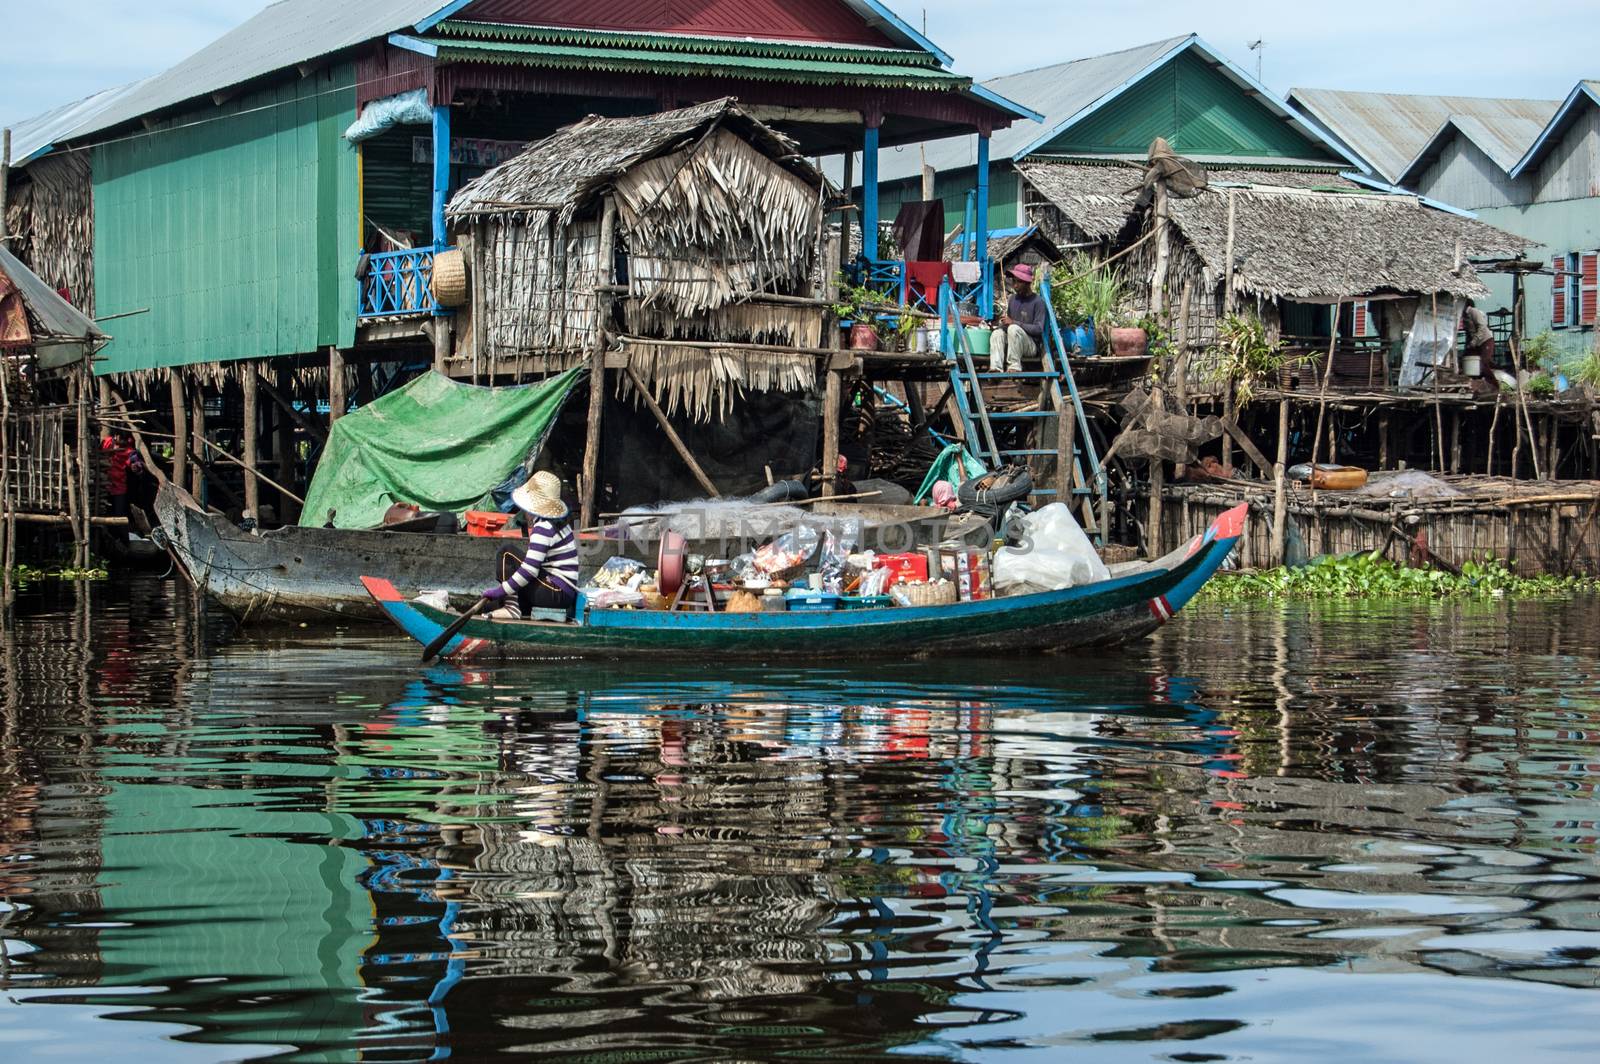 Loaded boat paddled through floating village, Cambodia by BasPhoto